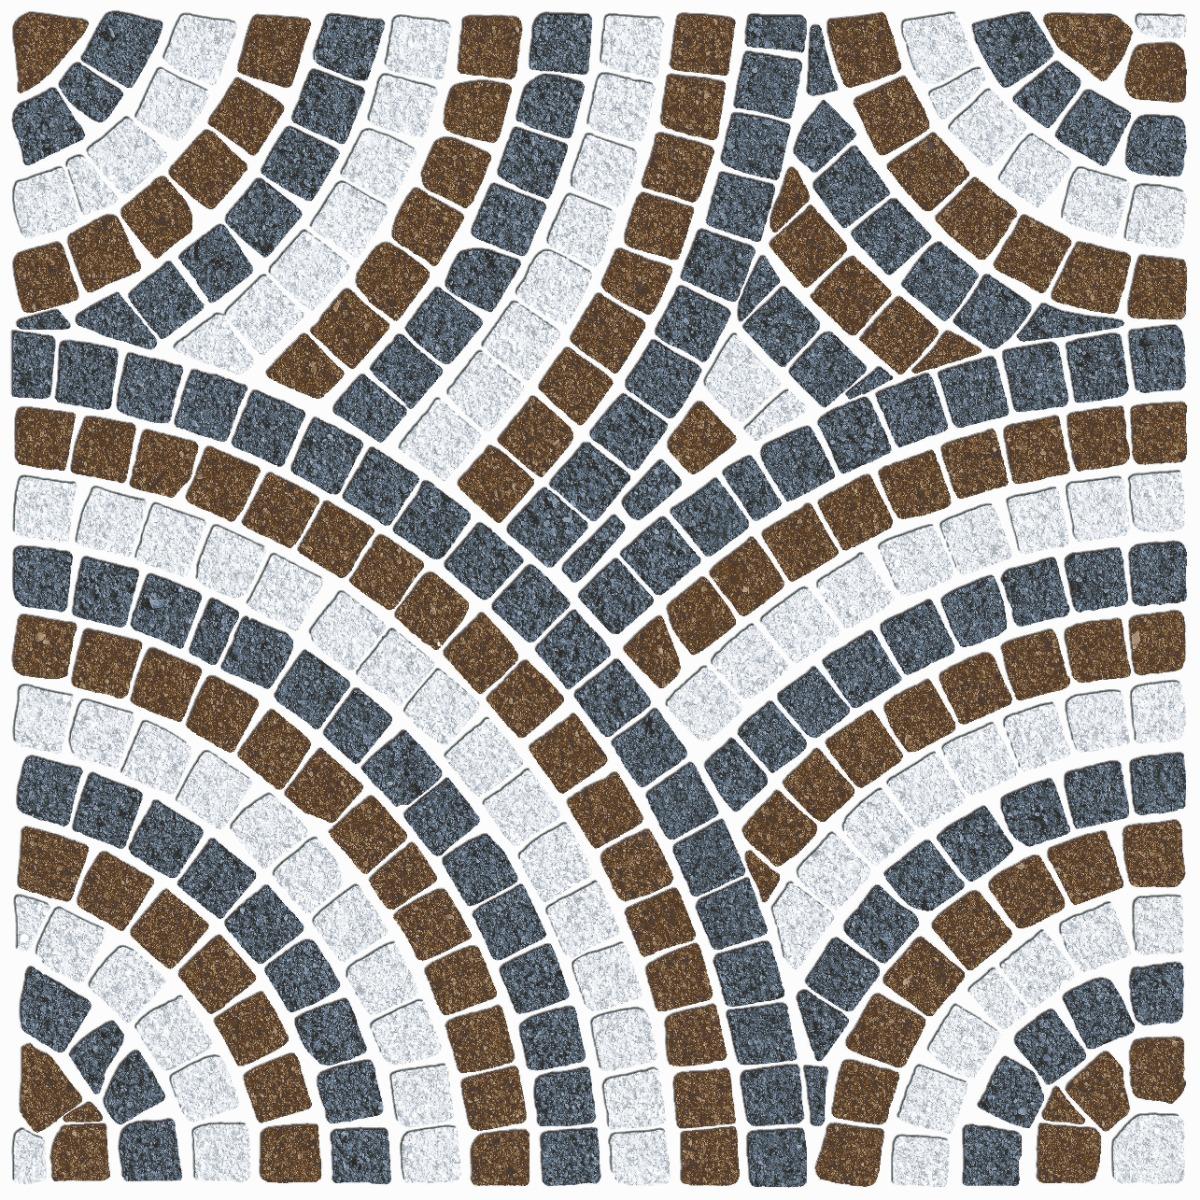 Geometric Tiles for Balcony Tiles, Parking Tiles, Terrace Tiles, Pathway Tiles, High Traffic Tiles, Commercial/Office, Outdoor Area